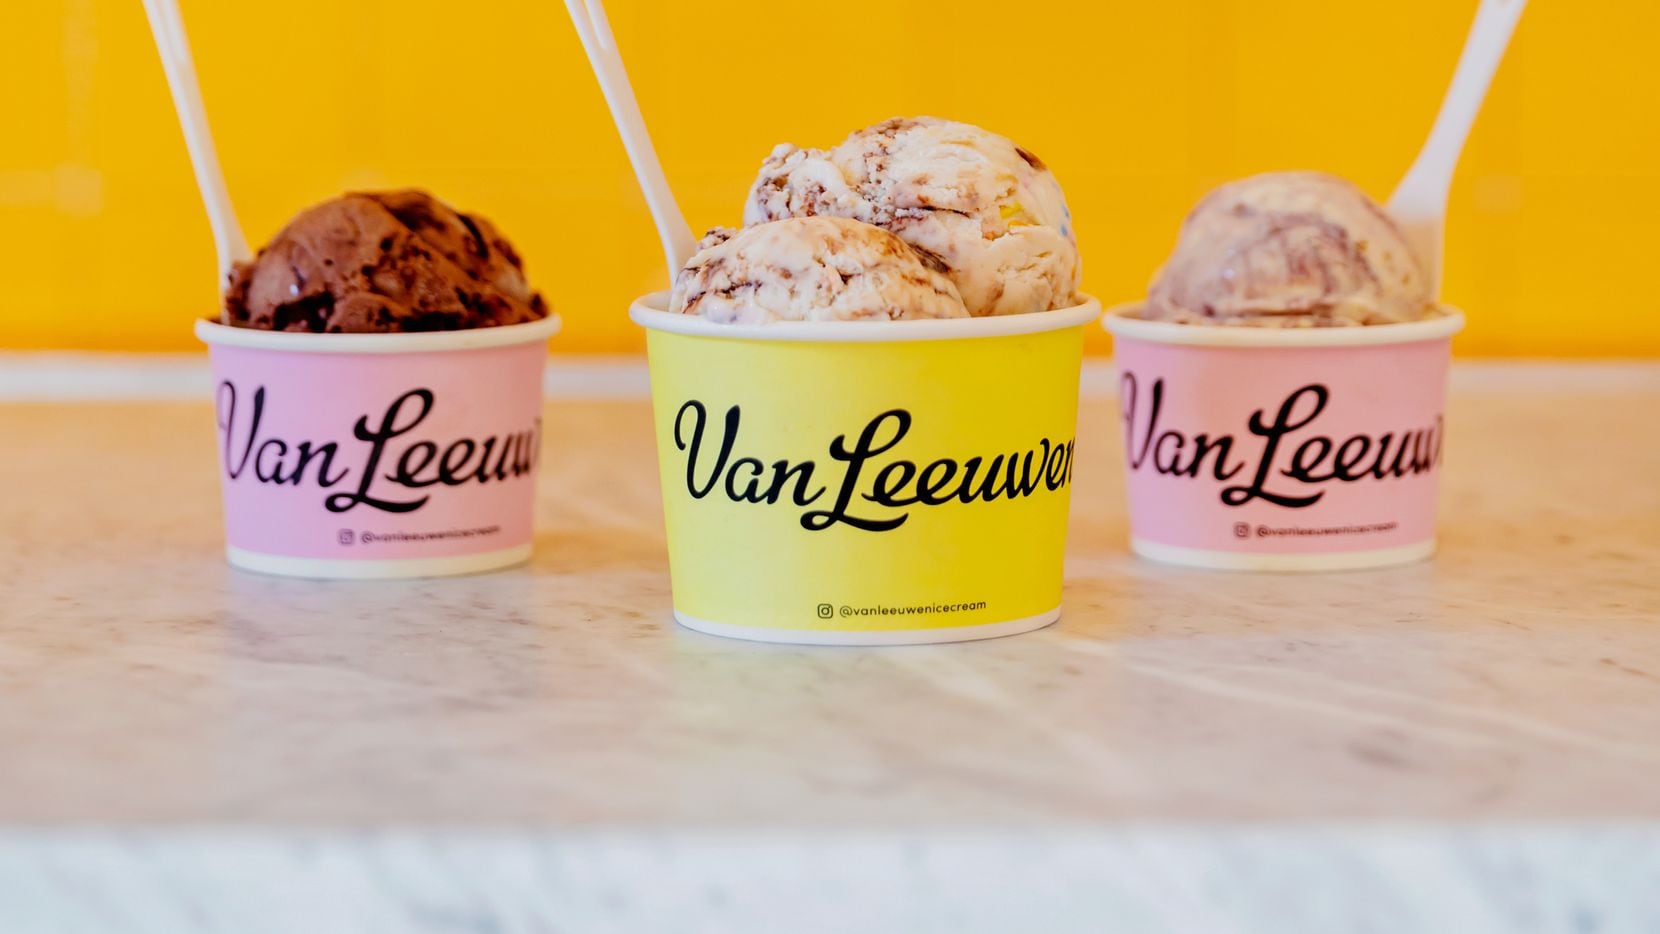 Van Leeuwen Ice Cream expands to Dallas.